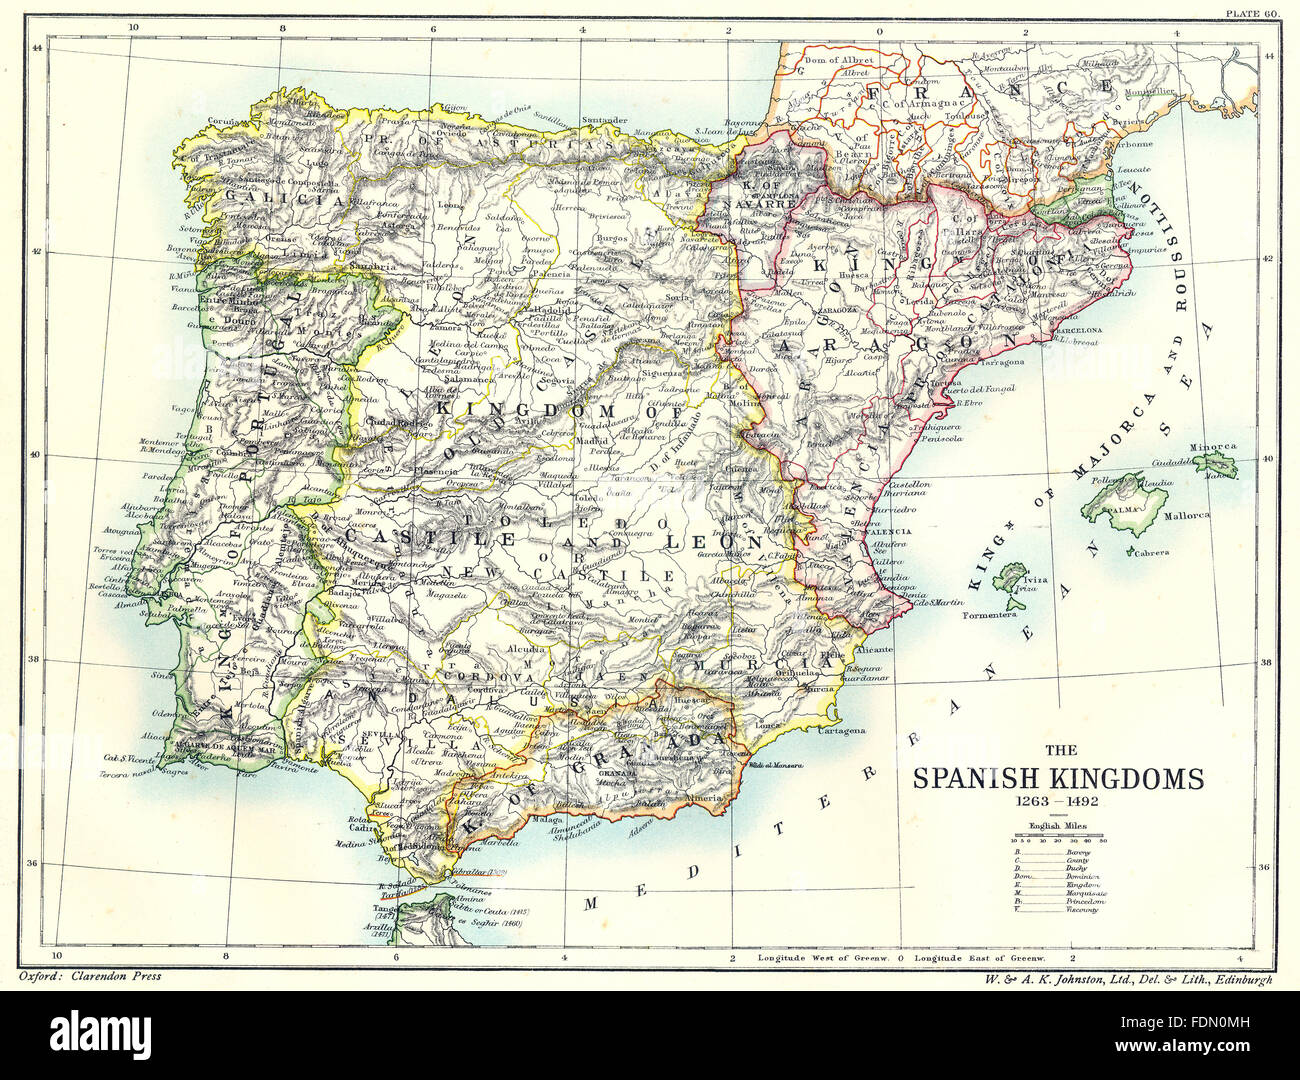 SPAIN: The Spanish Kingdoms 1263- 1492, 1903 antique map Stock Photo